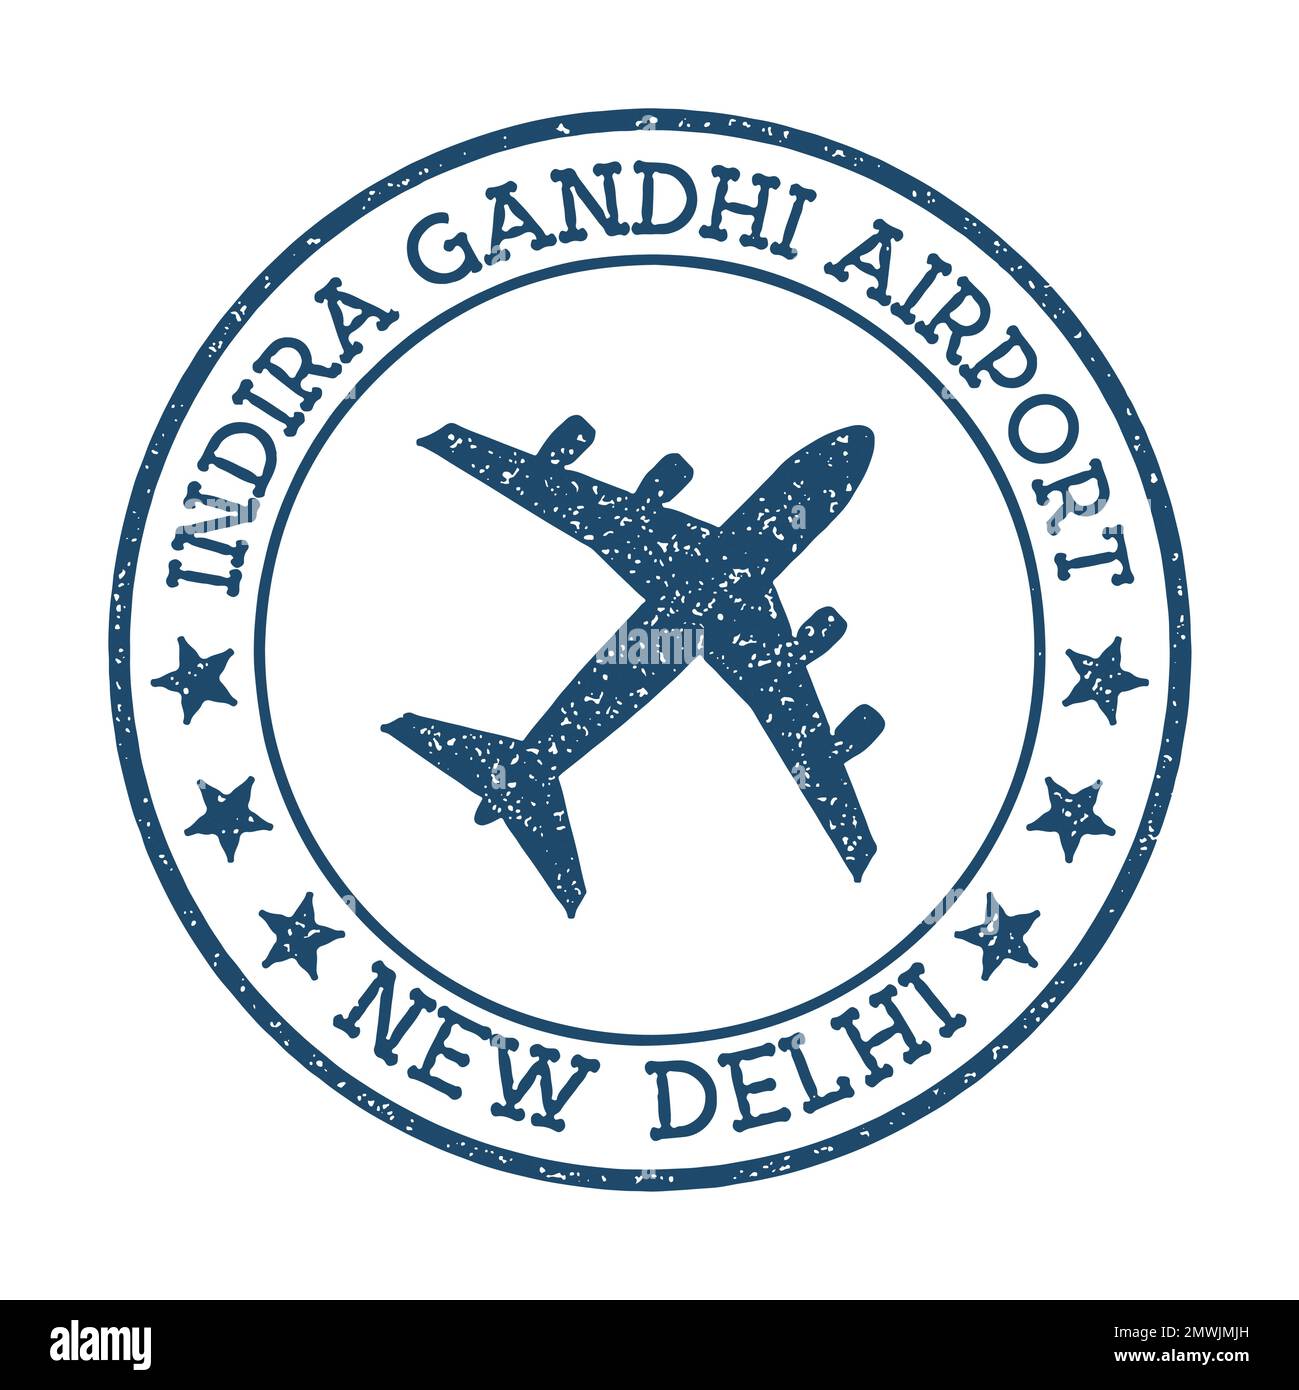 Indira Gandhi Airport New Delhi logo. Airport stamp vector illustration. New Delhi aerodrome. Stock Vector